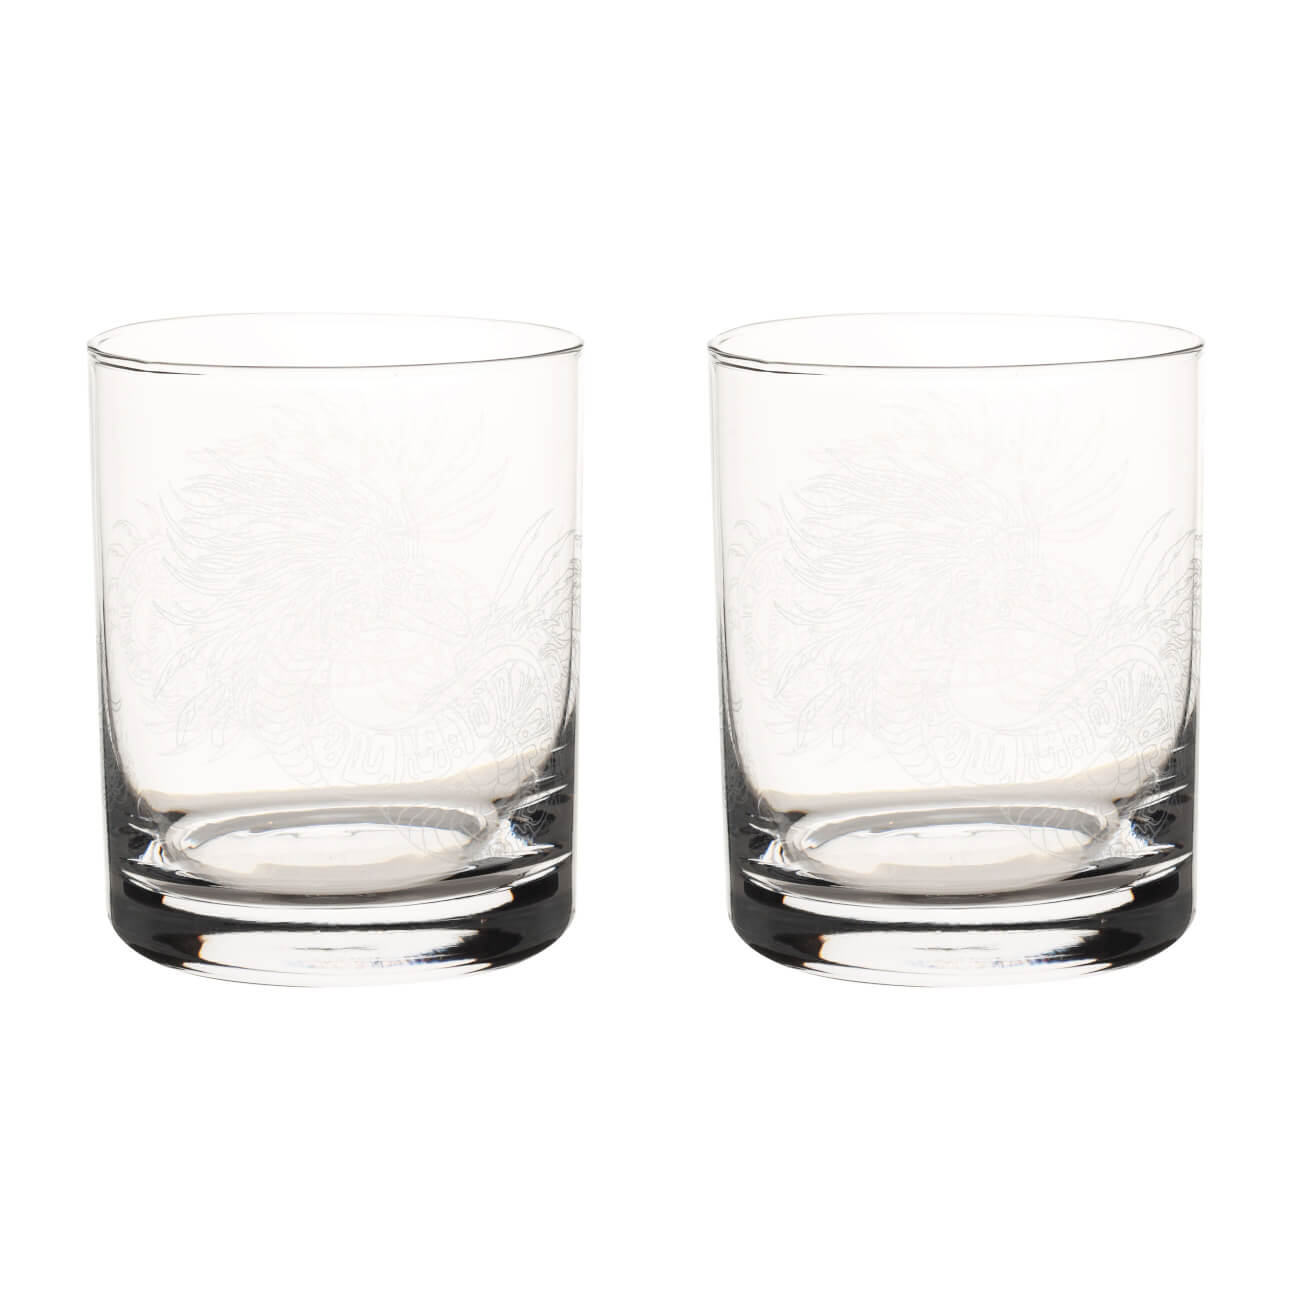 стакан для виски crystalex идеал набор 6 шт стекло 00895 Стакан для виски, 370 мл, 2 шт, стекло, Dragon dayron